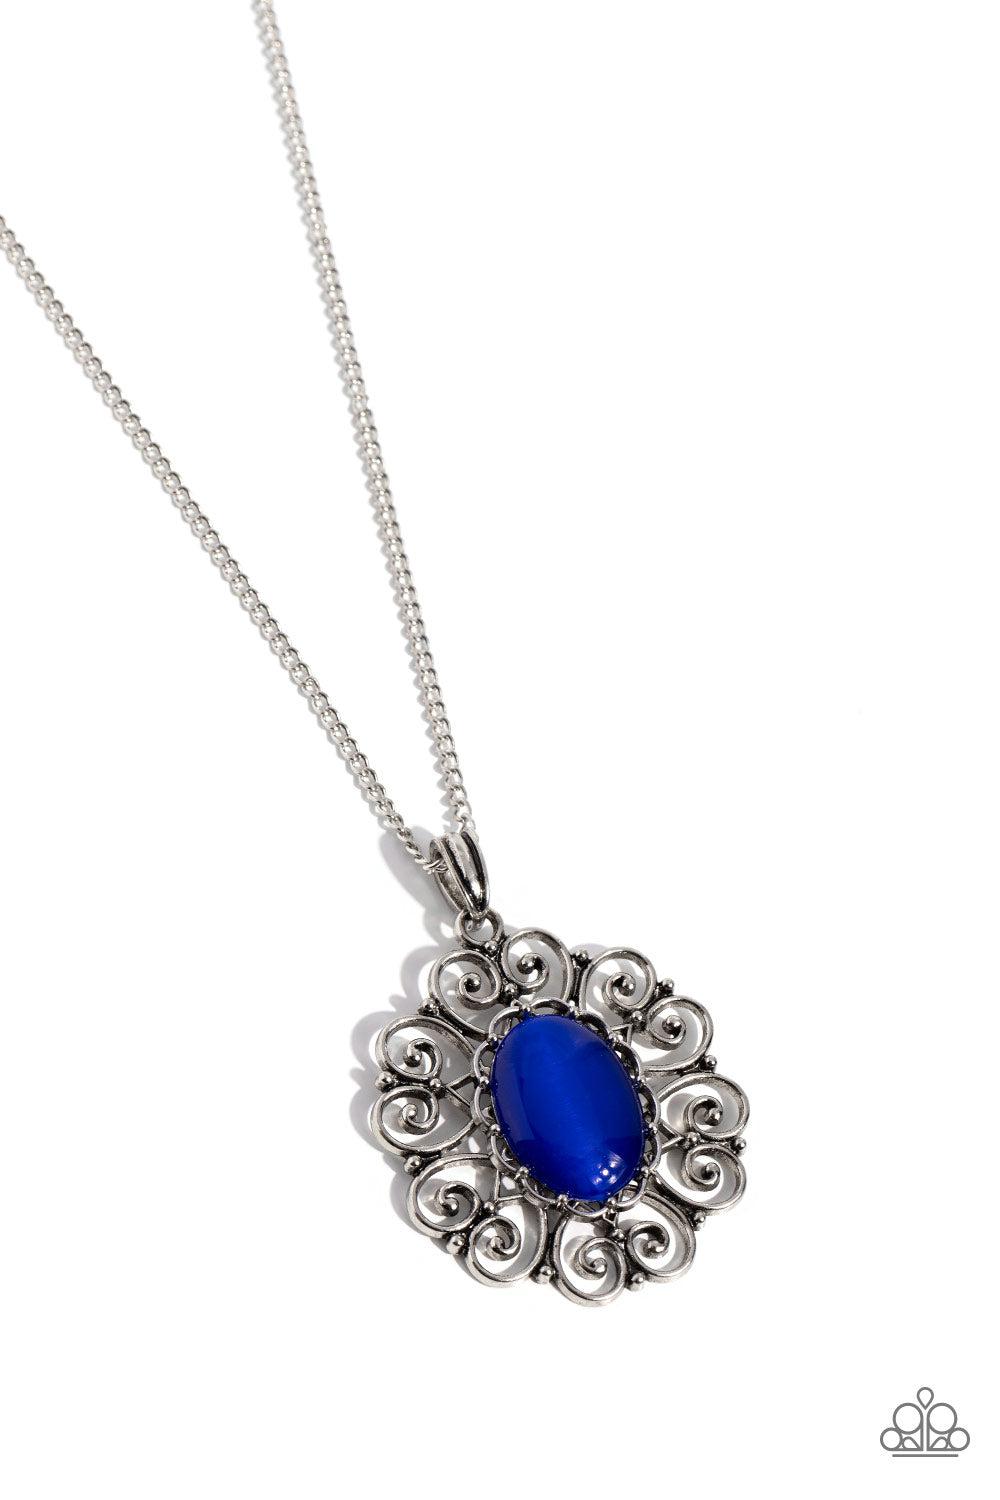 Sentimental Sabbatical Blue Cat's Eye Necklace - Paparazzi Accessories- lightbox - CarasShop.com - $5 Jewelry by Cara Jewels